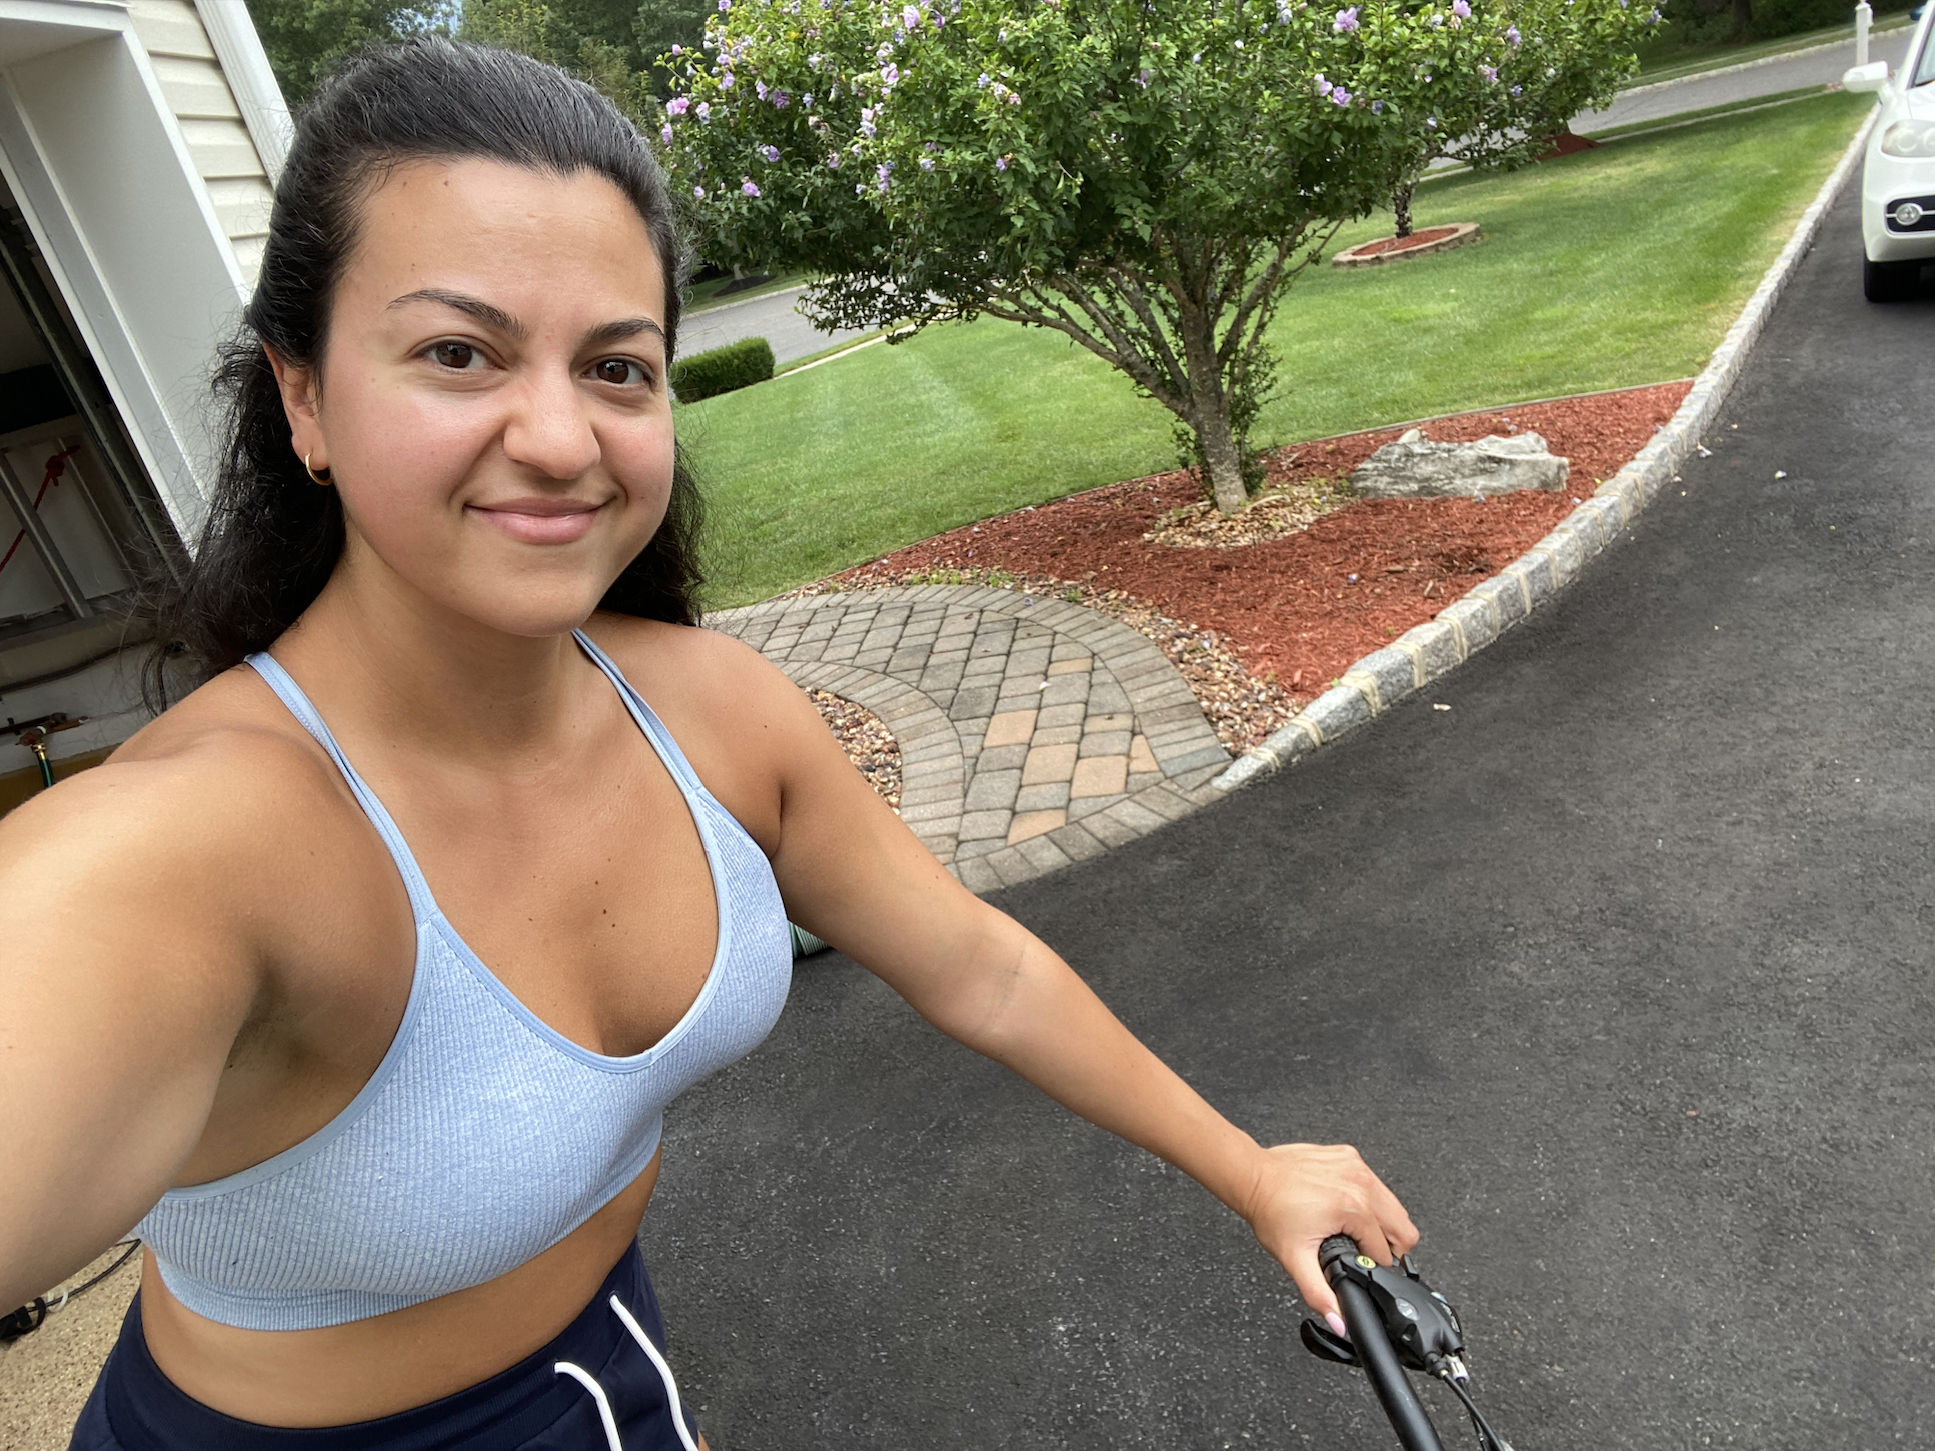 The writer taking a selfie on her bike